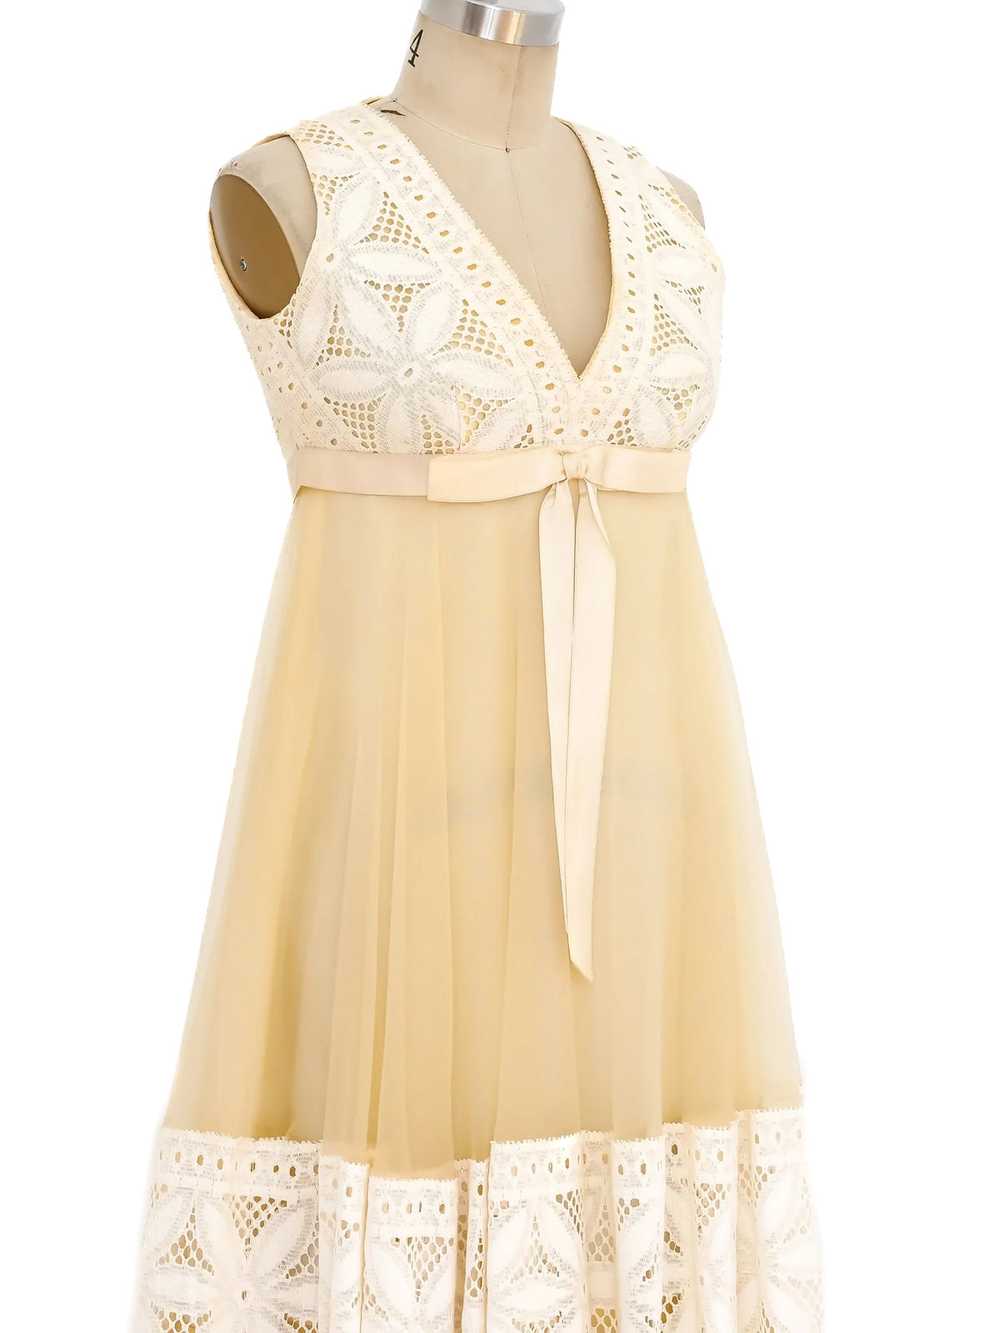 Jean Varon Lace Trimmed Chiffon Dress - image 4